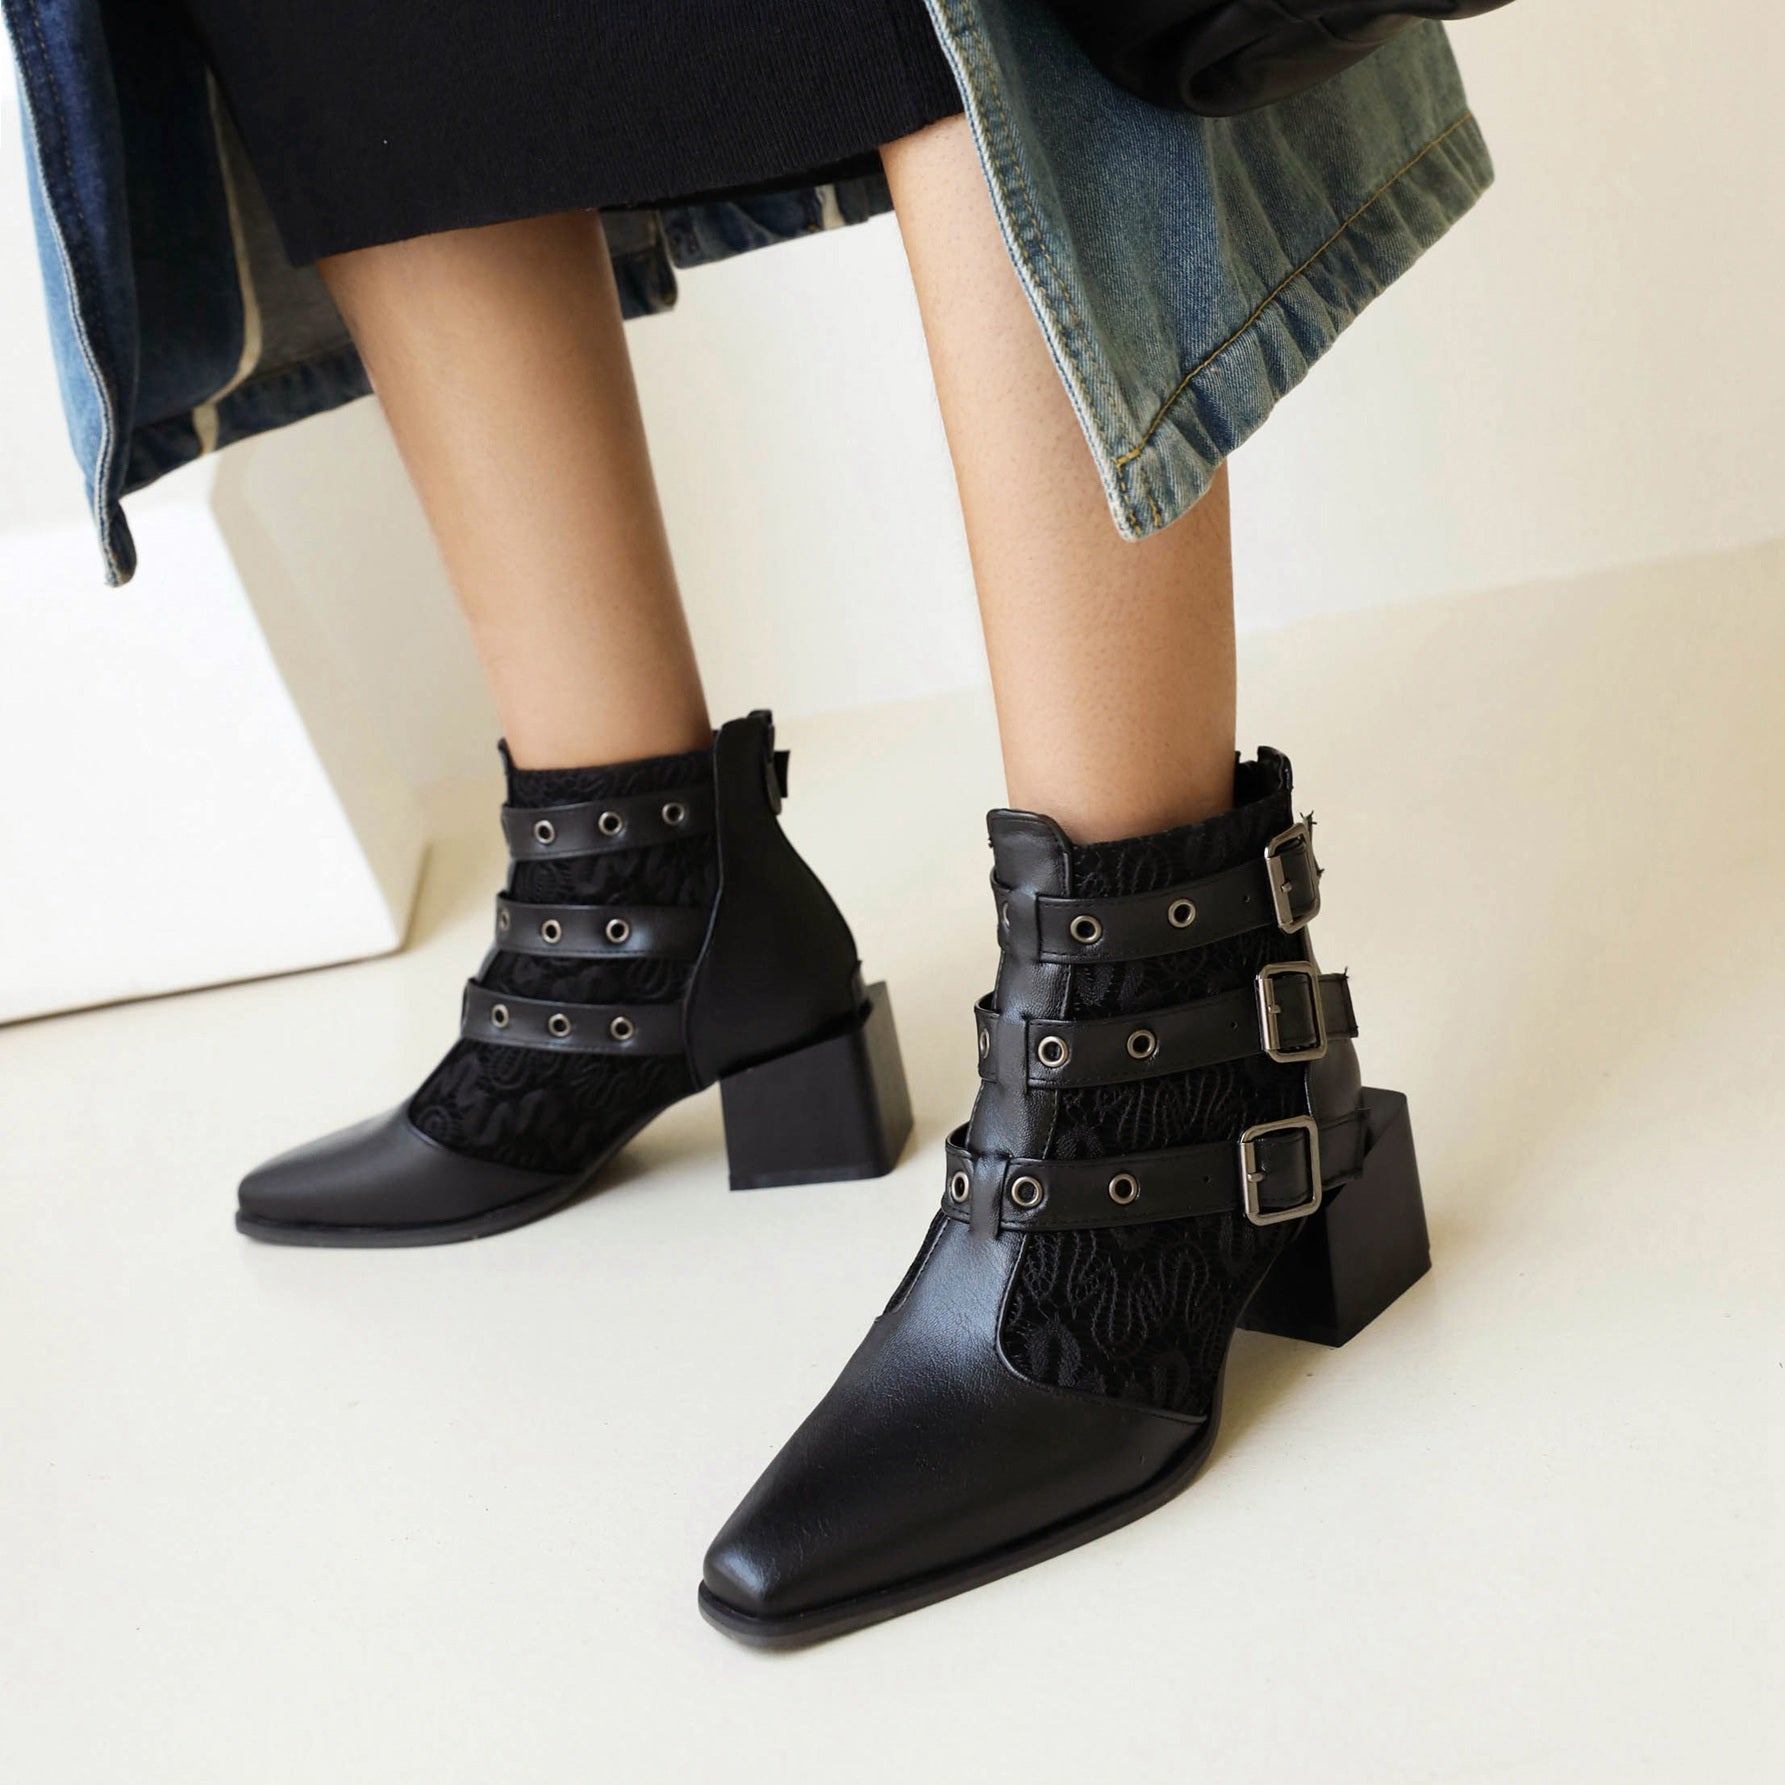 Bigsizeheels Fashion pointed square heel ankle boots - Black freeshipping - bigsizeheel®-size5-size15 -All Plus Sizes Available!